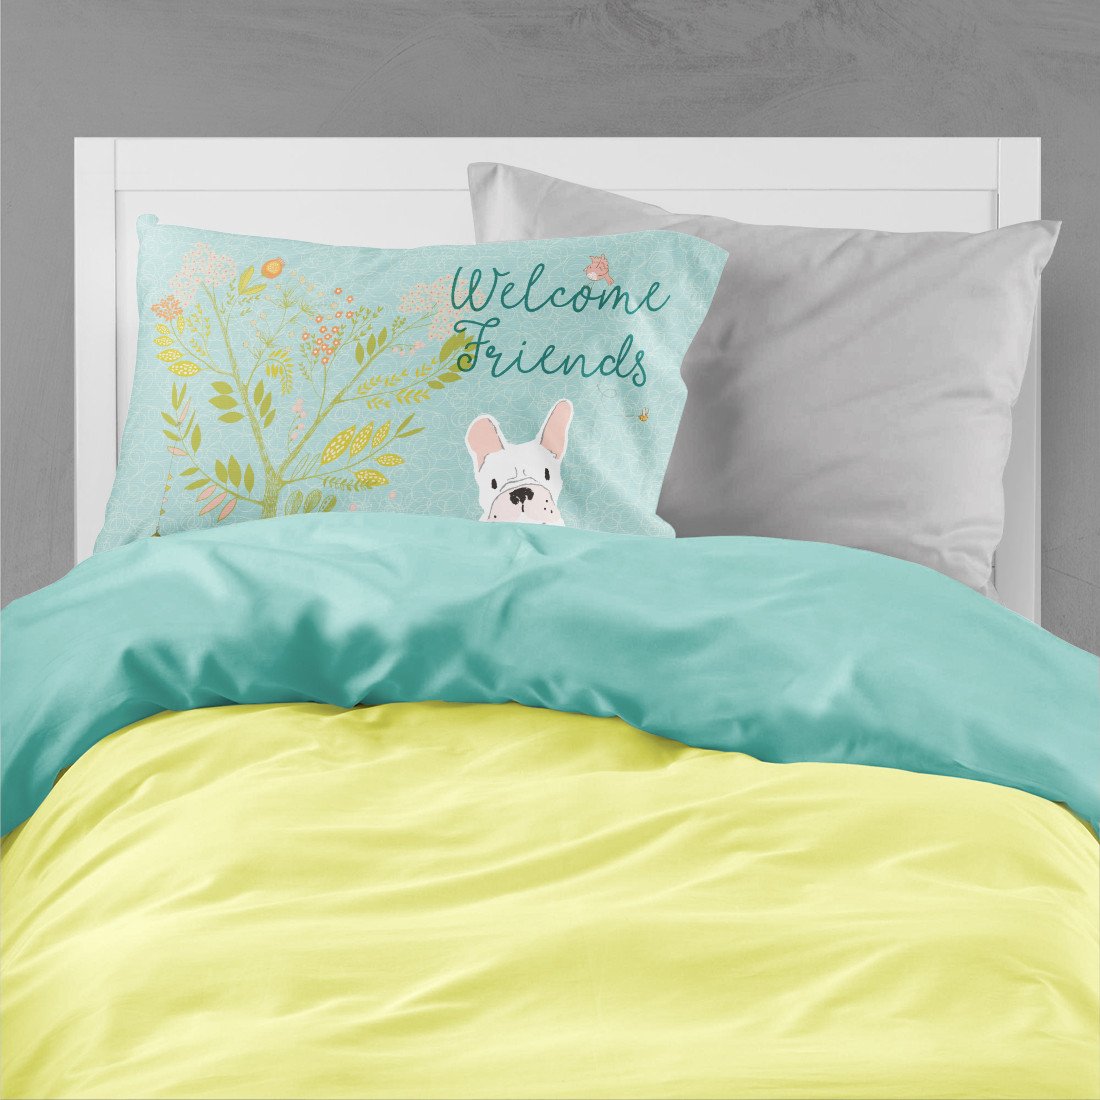 Welcome Friends White French Bulldog Fabric Standard Pillowcase BB7635PILLOWCASE by Caroline's Treasures